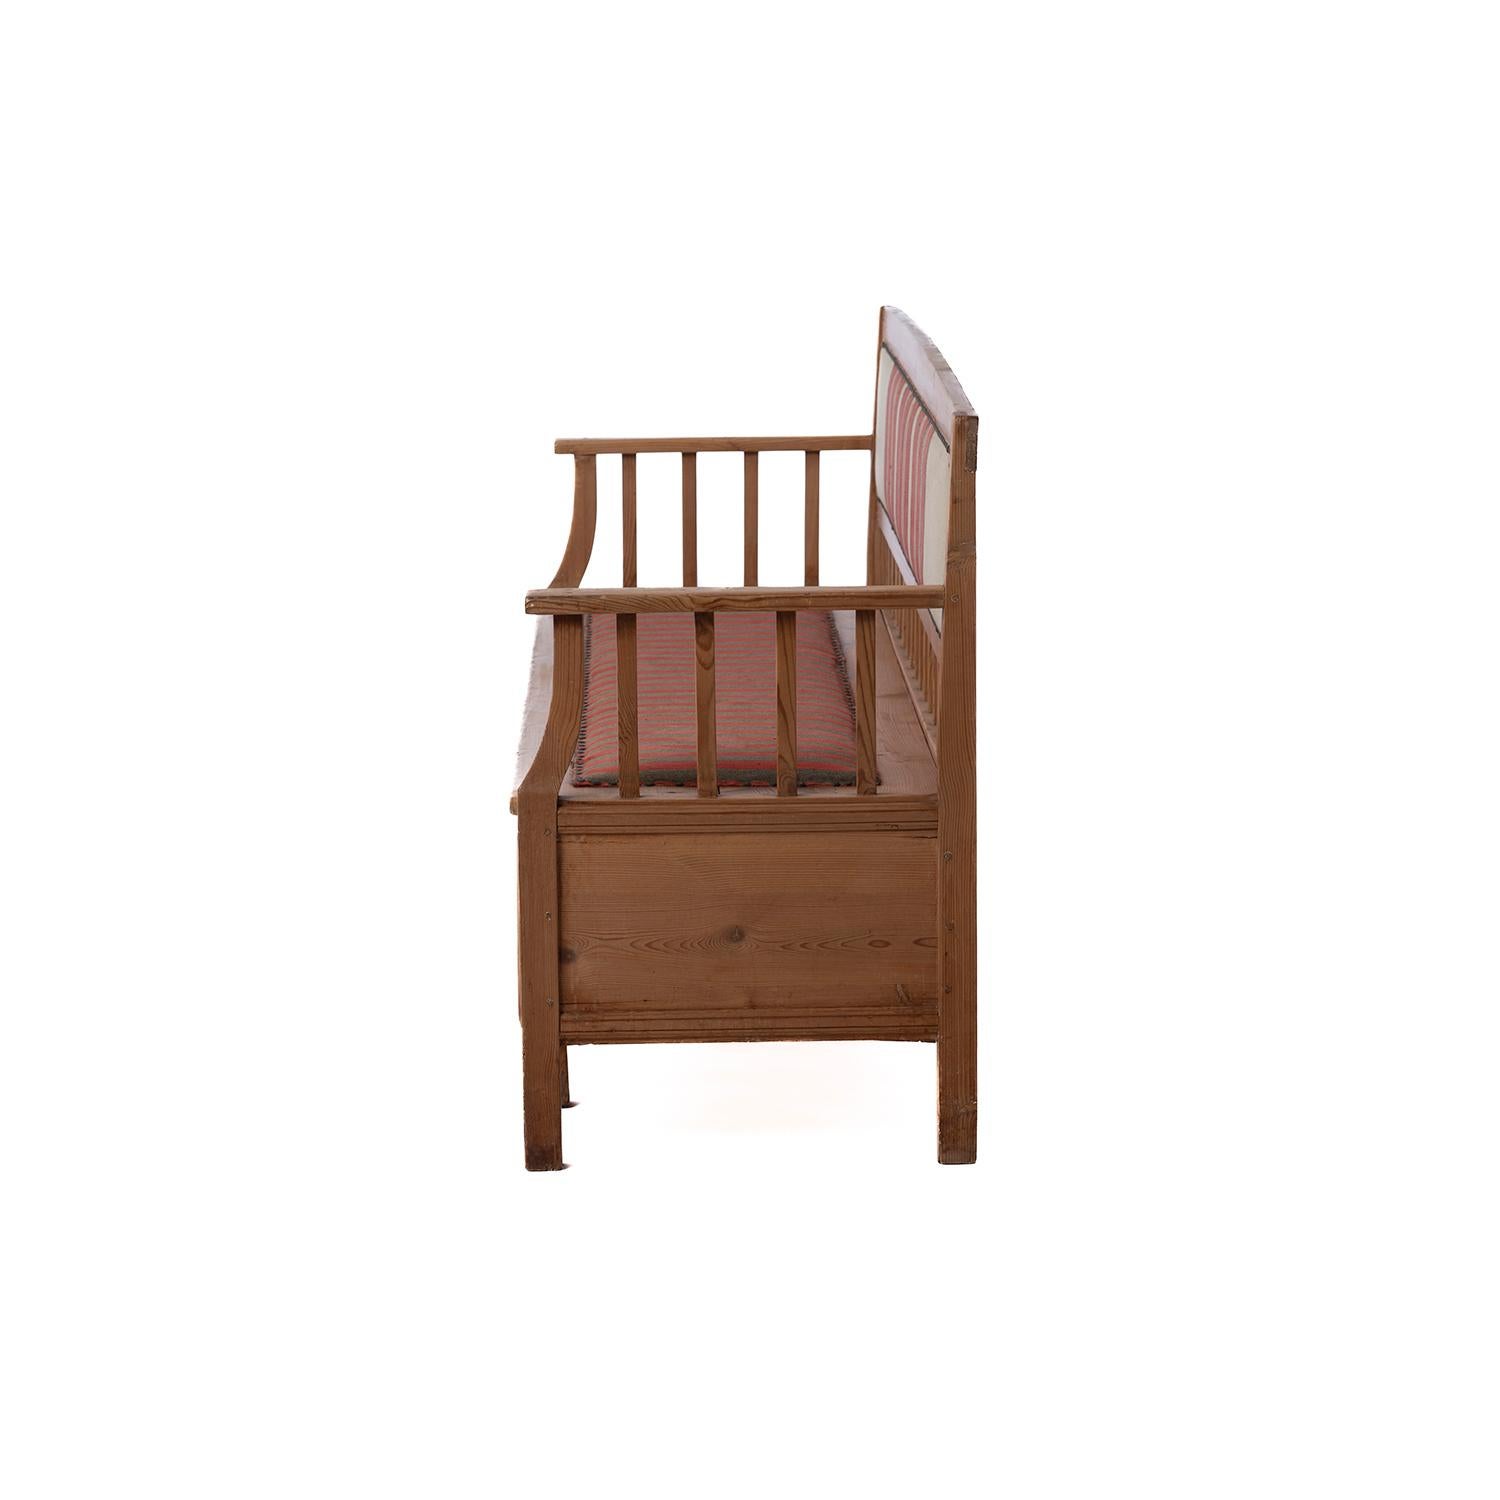 20th Century Scandinavian Modern Upholstered Pine Bench For Sale